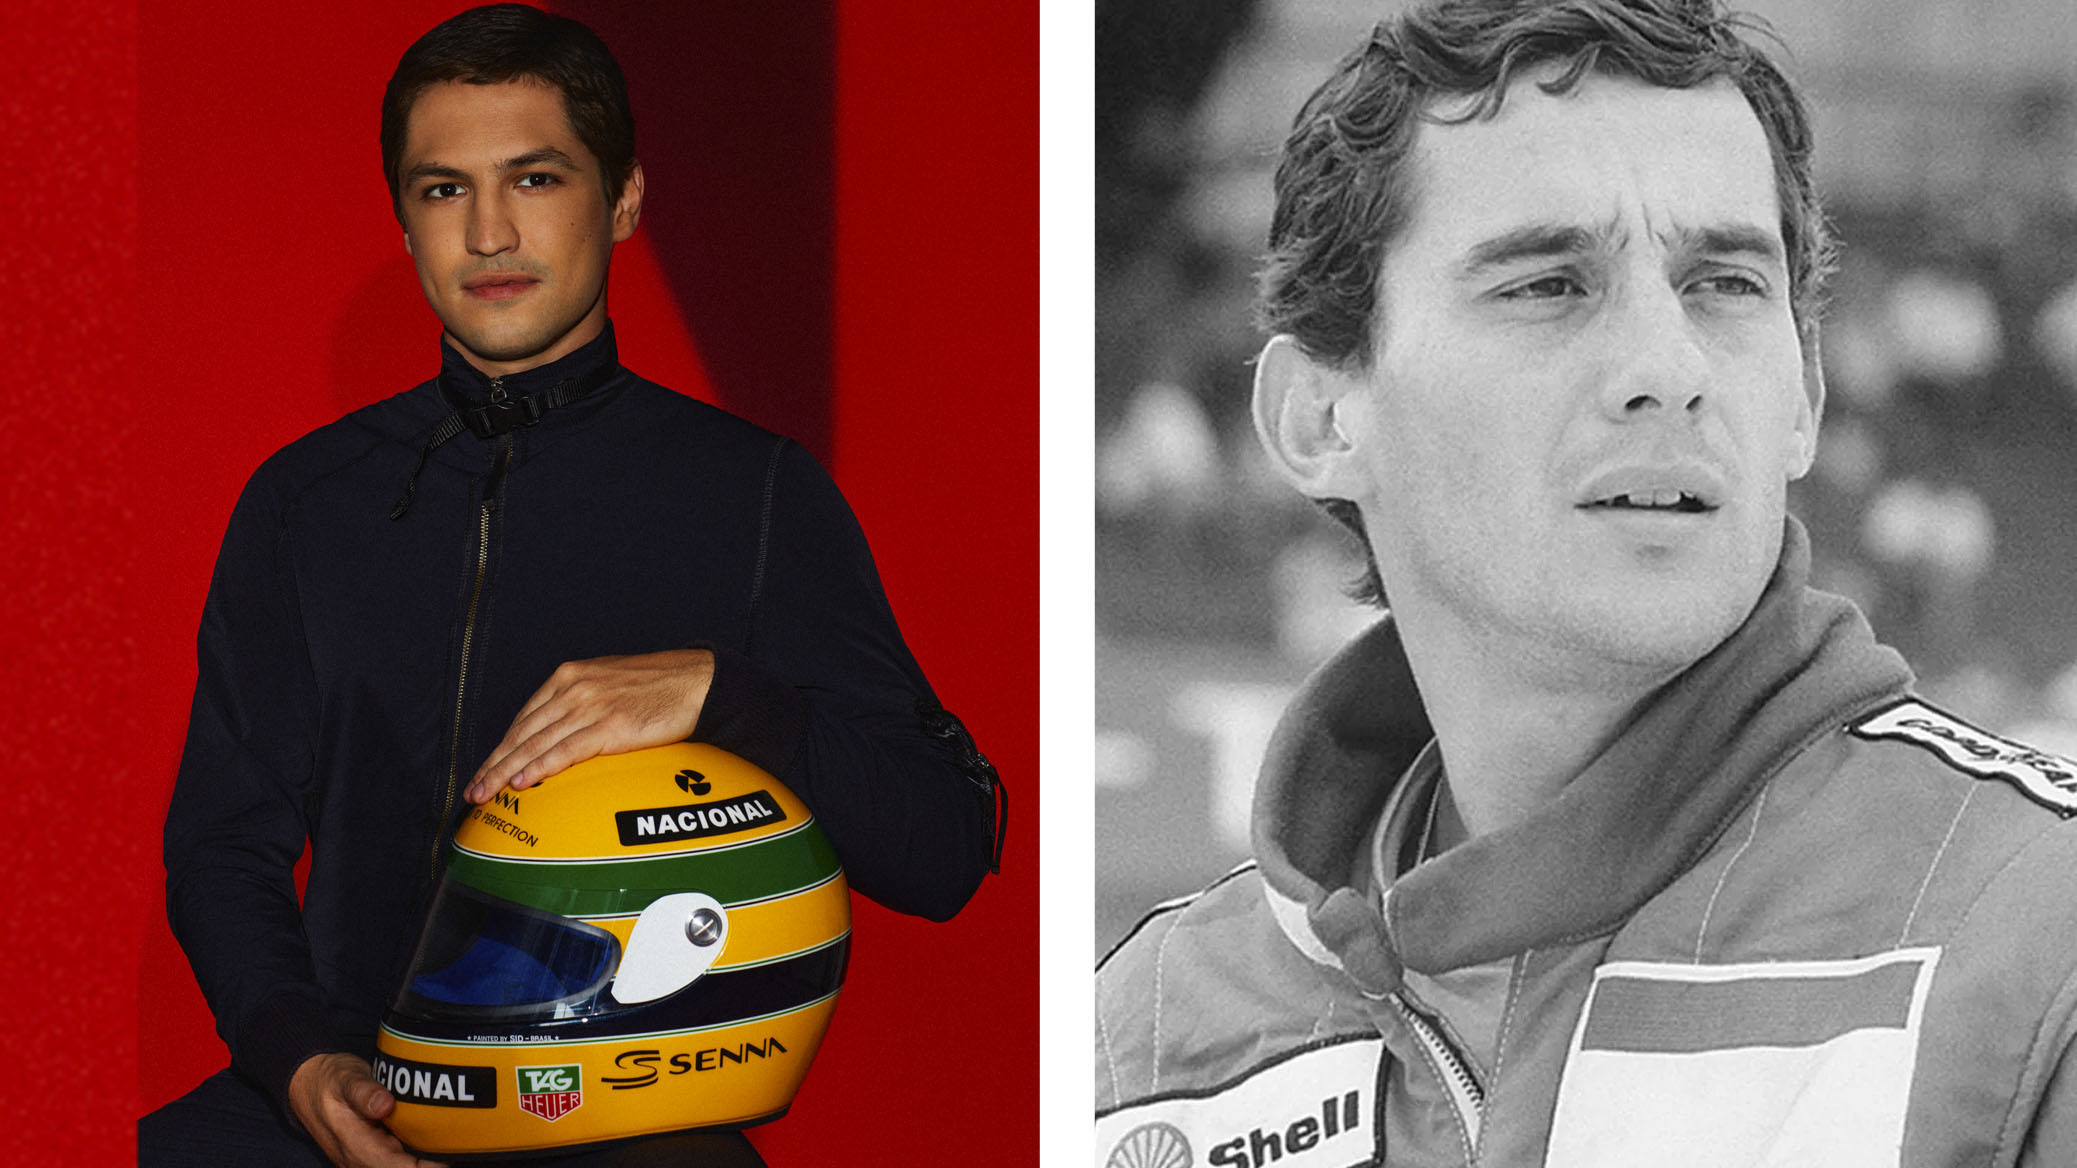 Netflix announces first fictional drama about Ayrton Senna - About